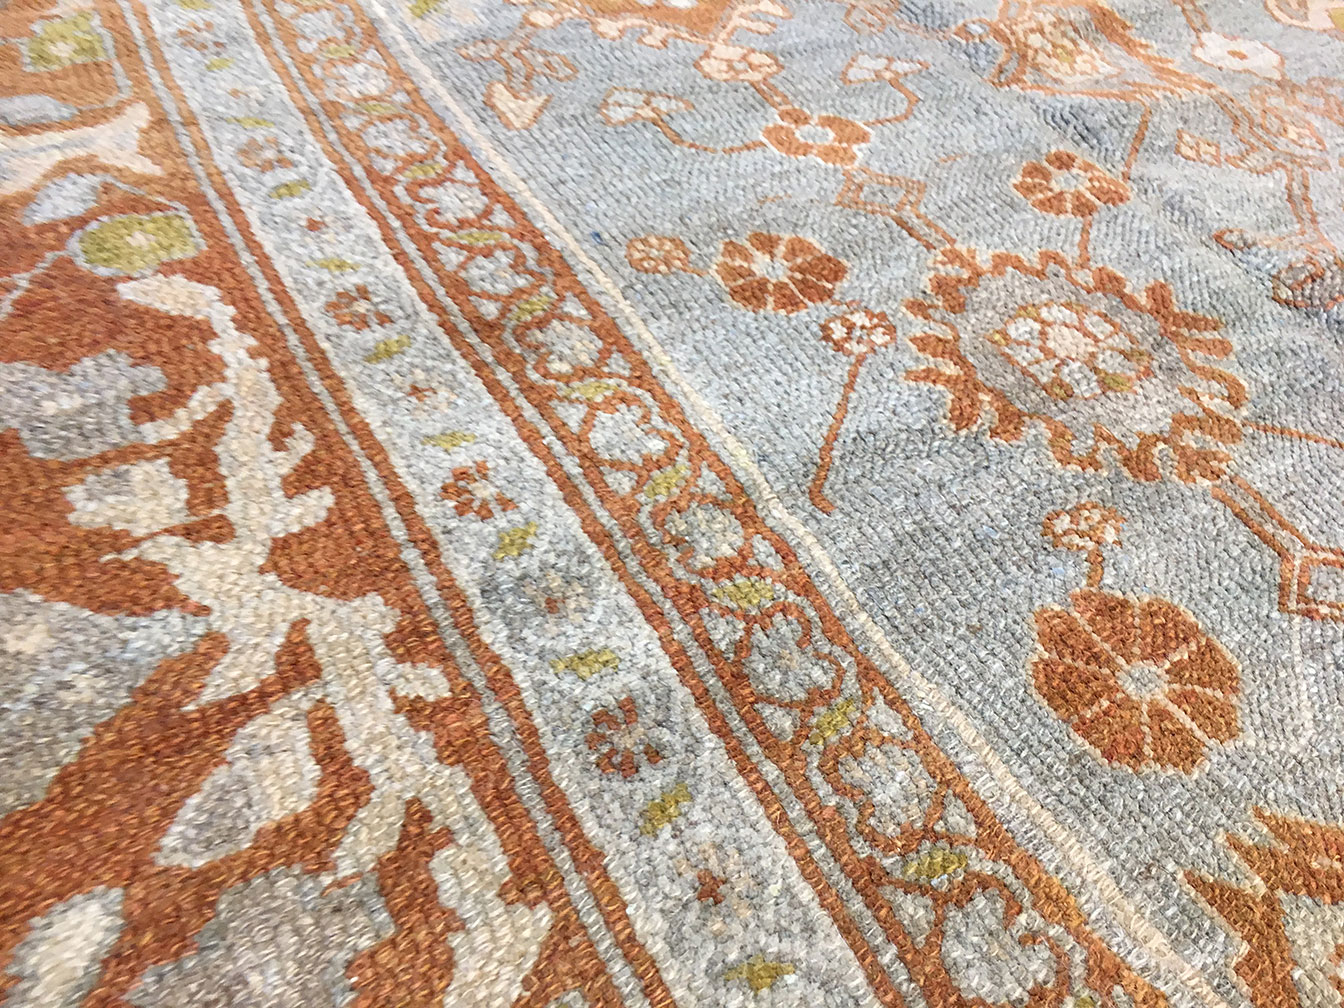 Antique bibi kabad Carpet - # 52341